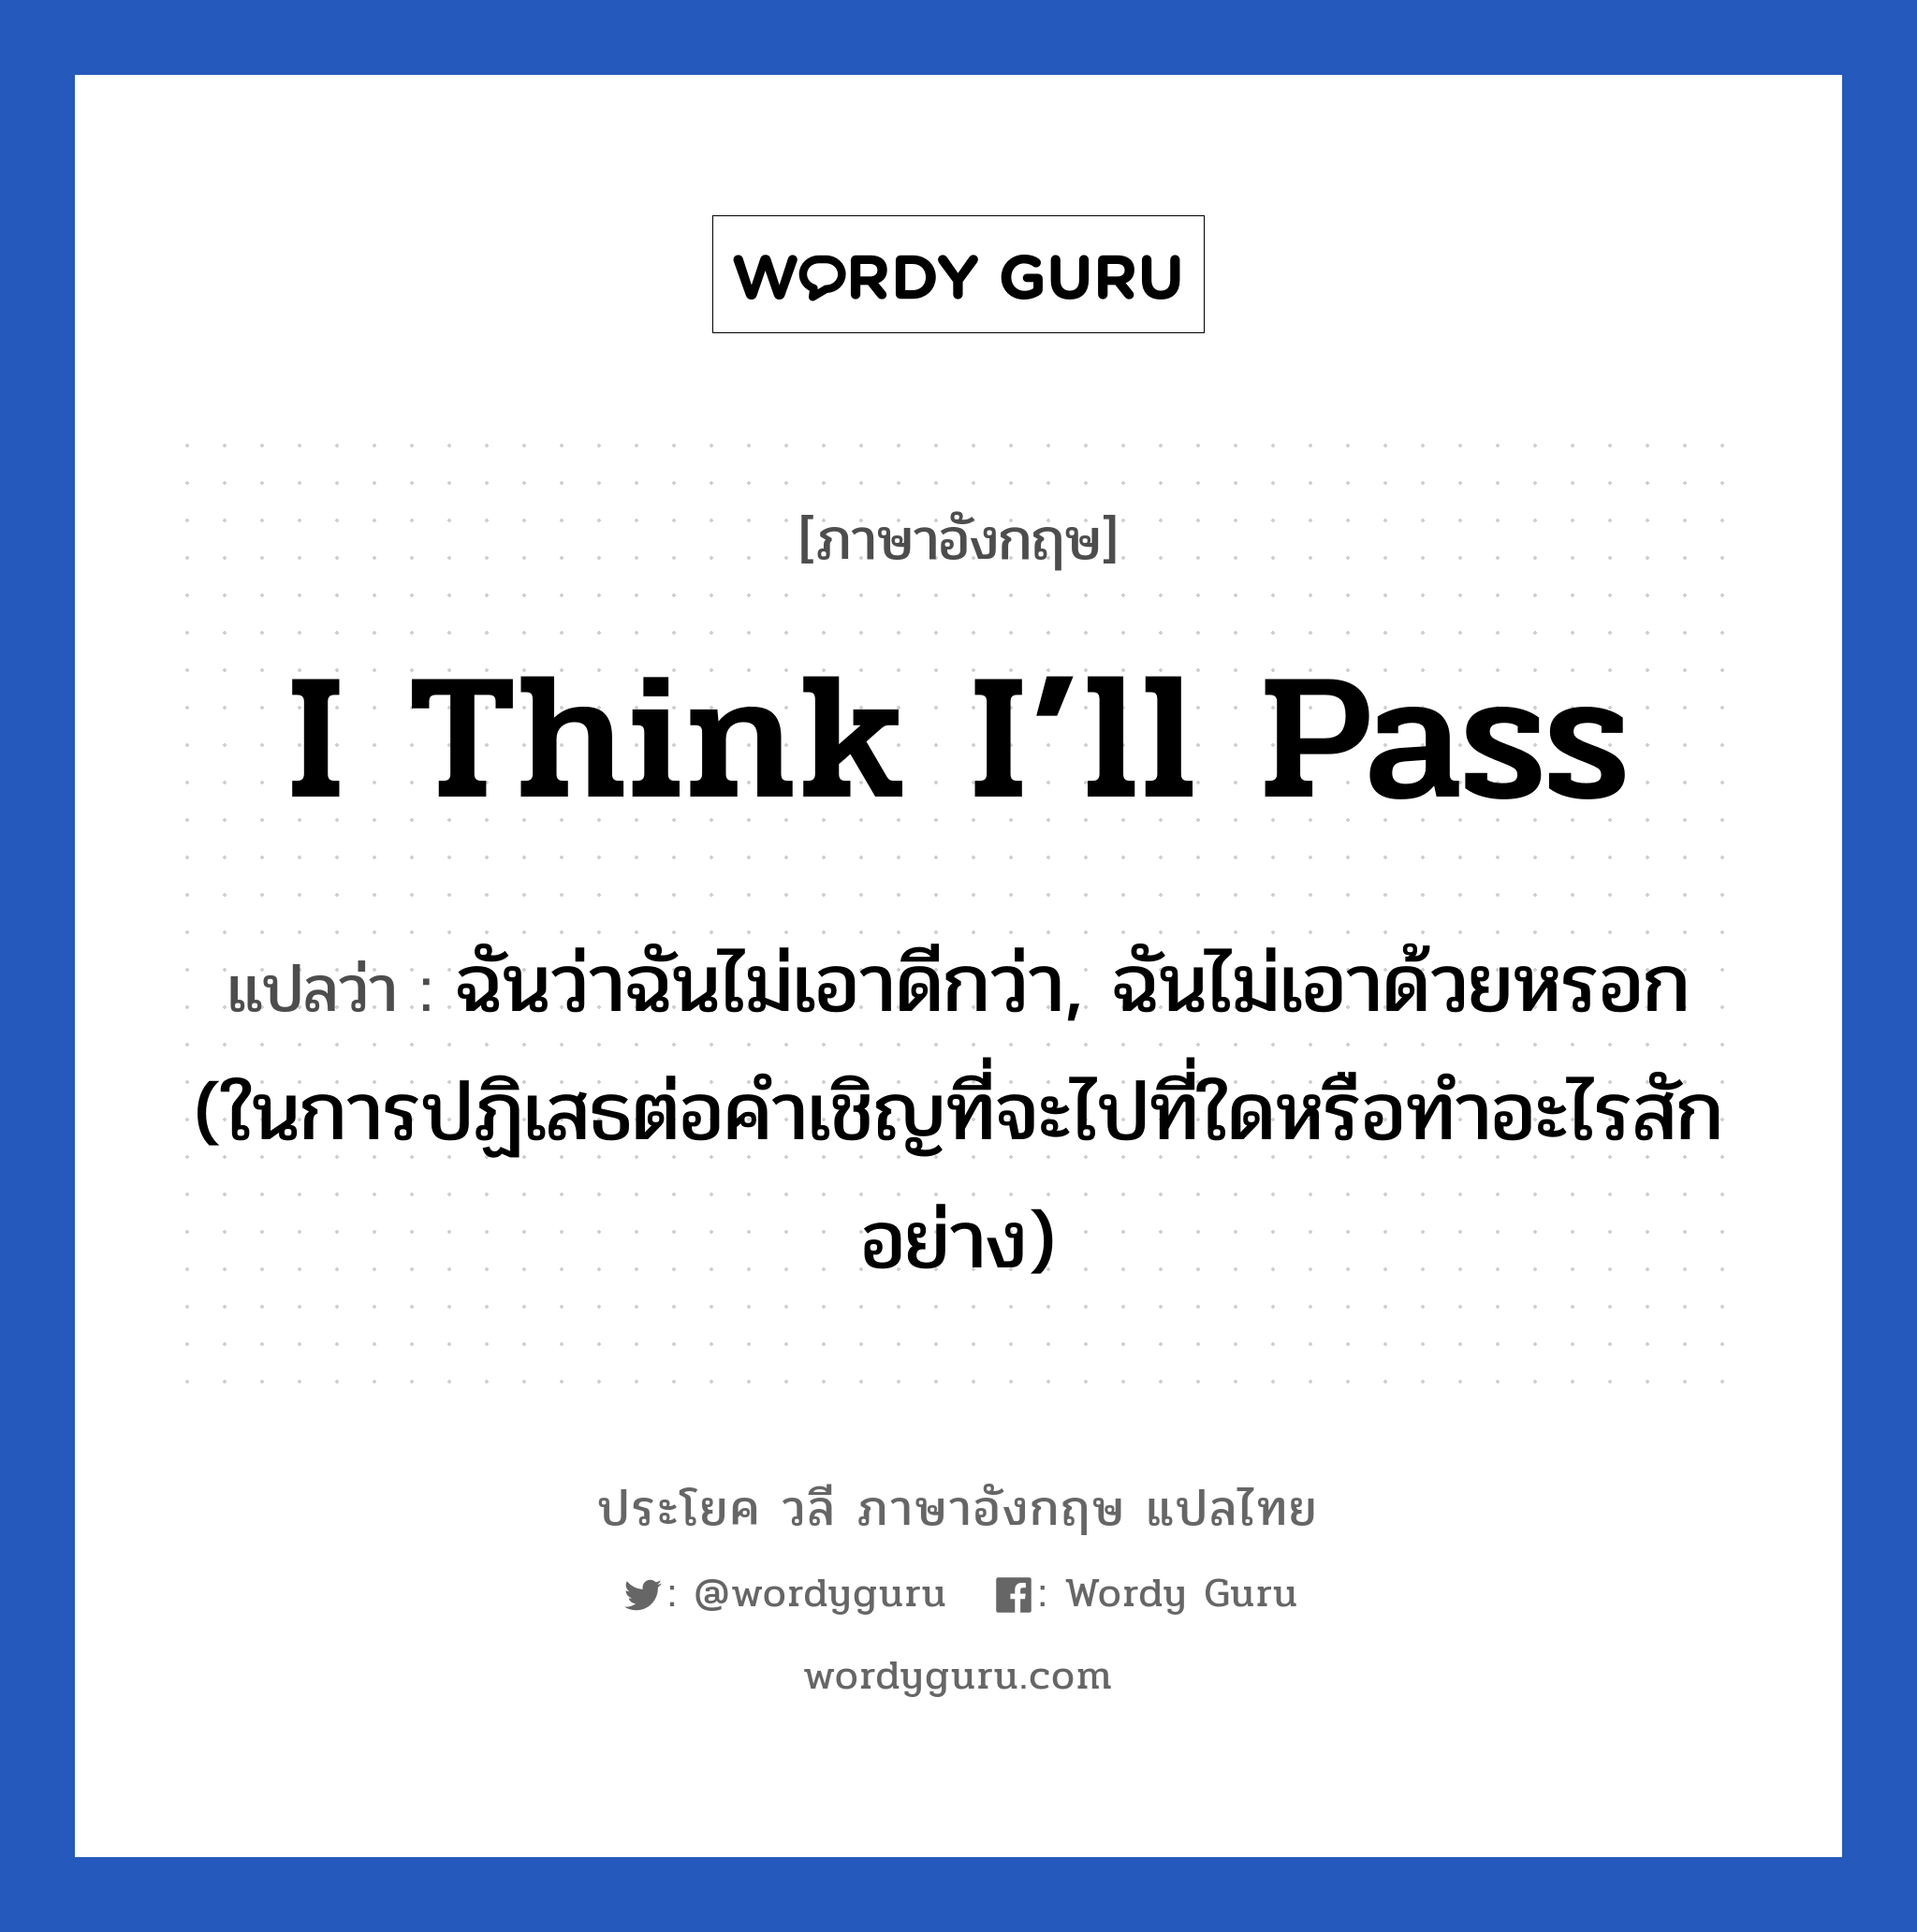 I think I’ll pass แปลว่า?, วลีภาษาอังกฤษ I think I’ll pass แปลว่า ฉันว่าฉันไม่เอาดีกว่า, ฉันไม่เอาด้วยหรอก (ในการปฏิเสธต่อคำเชิญที่จะไปที่ใดหรือทำอะไรสักอย่าง)